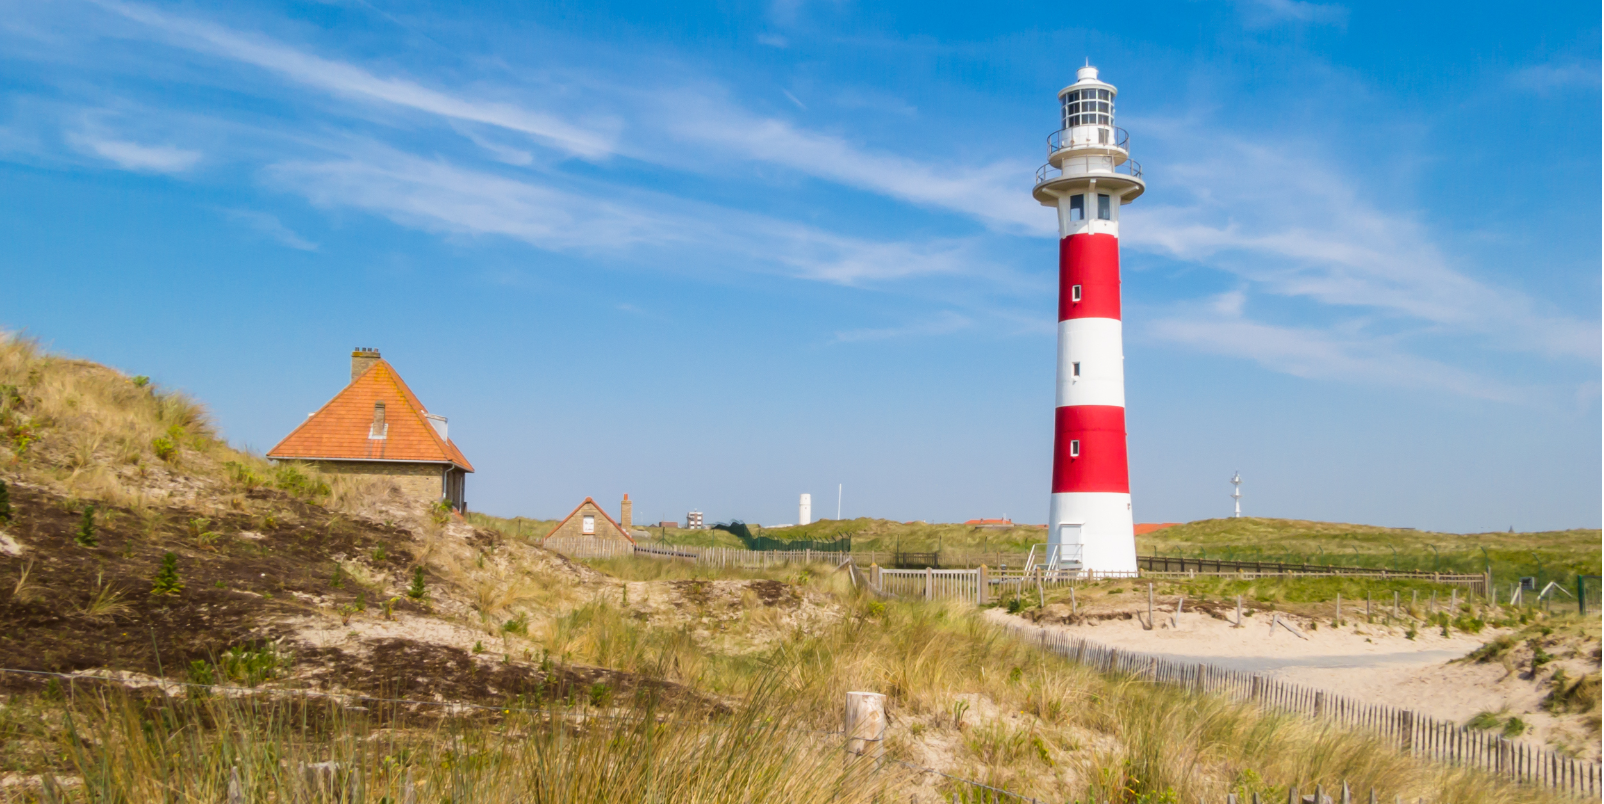 Lighthouse on the coast of the North Sea, Belgium